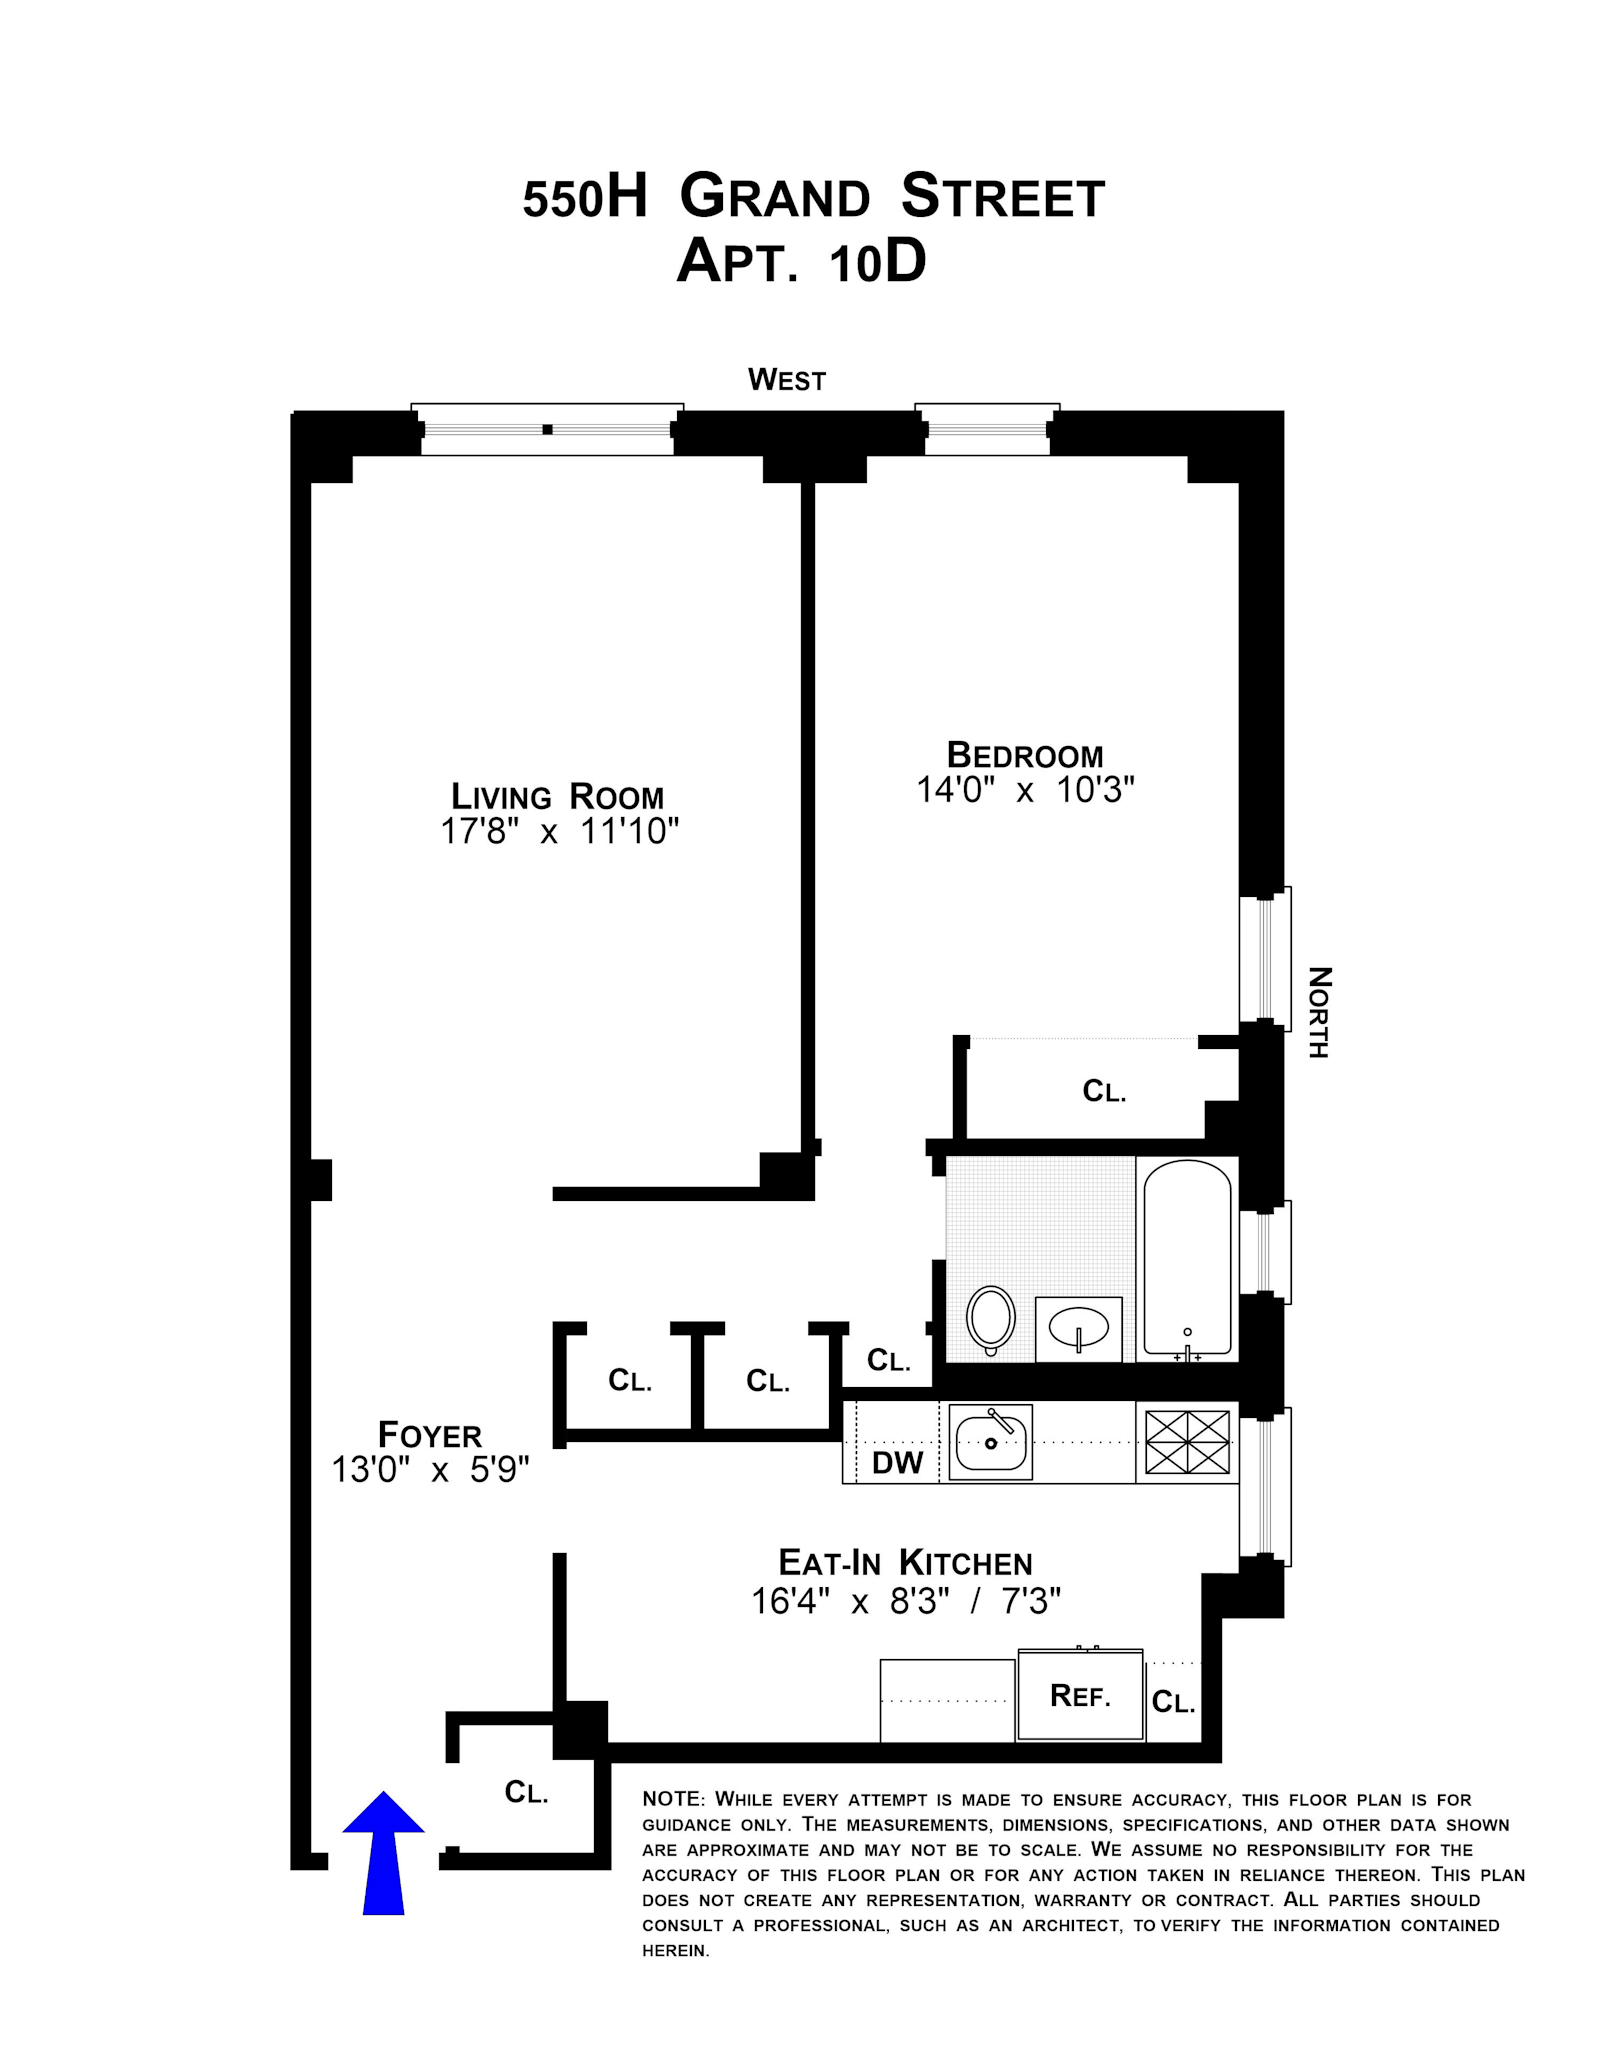 Floorplan for 550 Grand Street, H10D